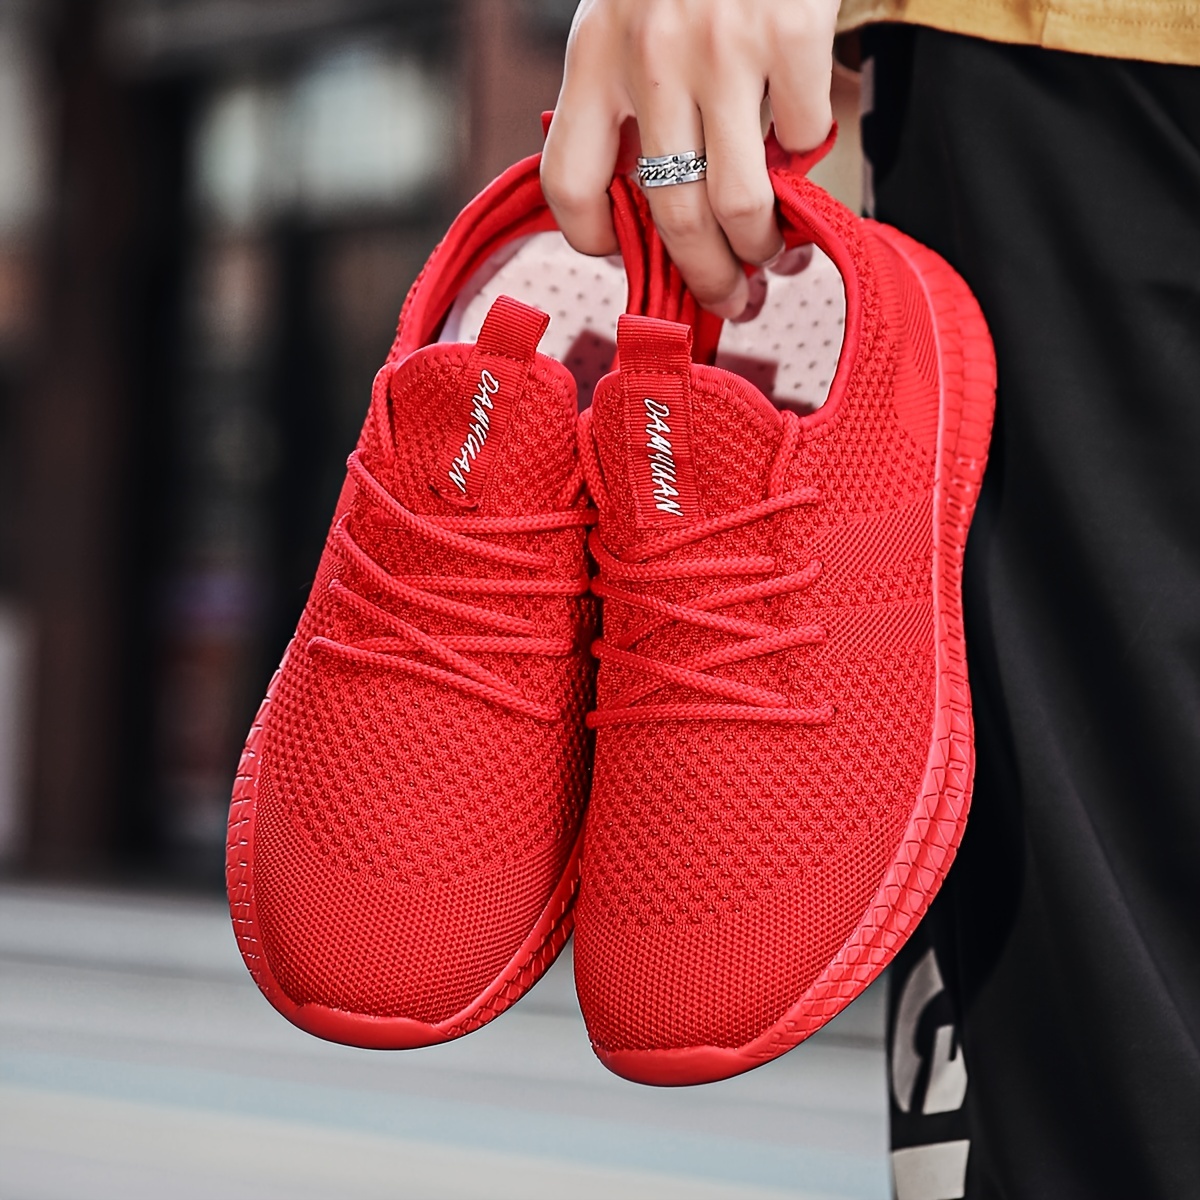 Zapatos Deportivos Mujer Rojos